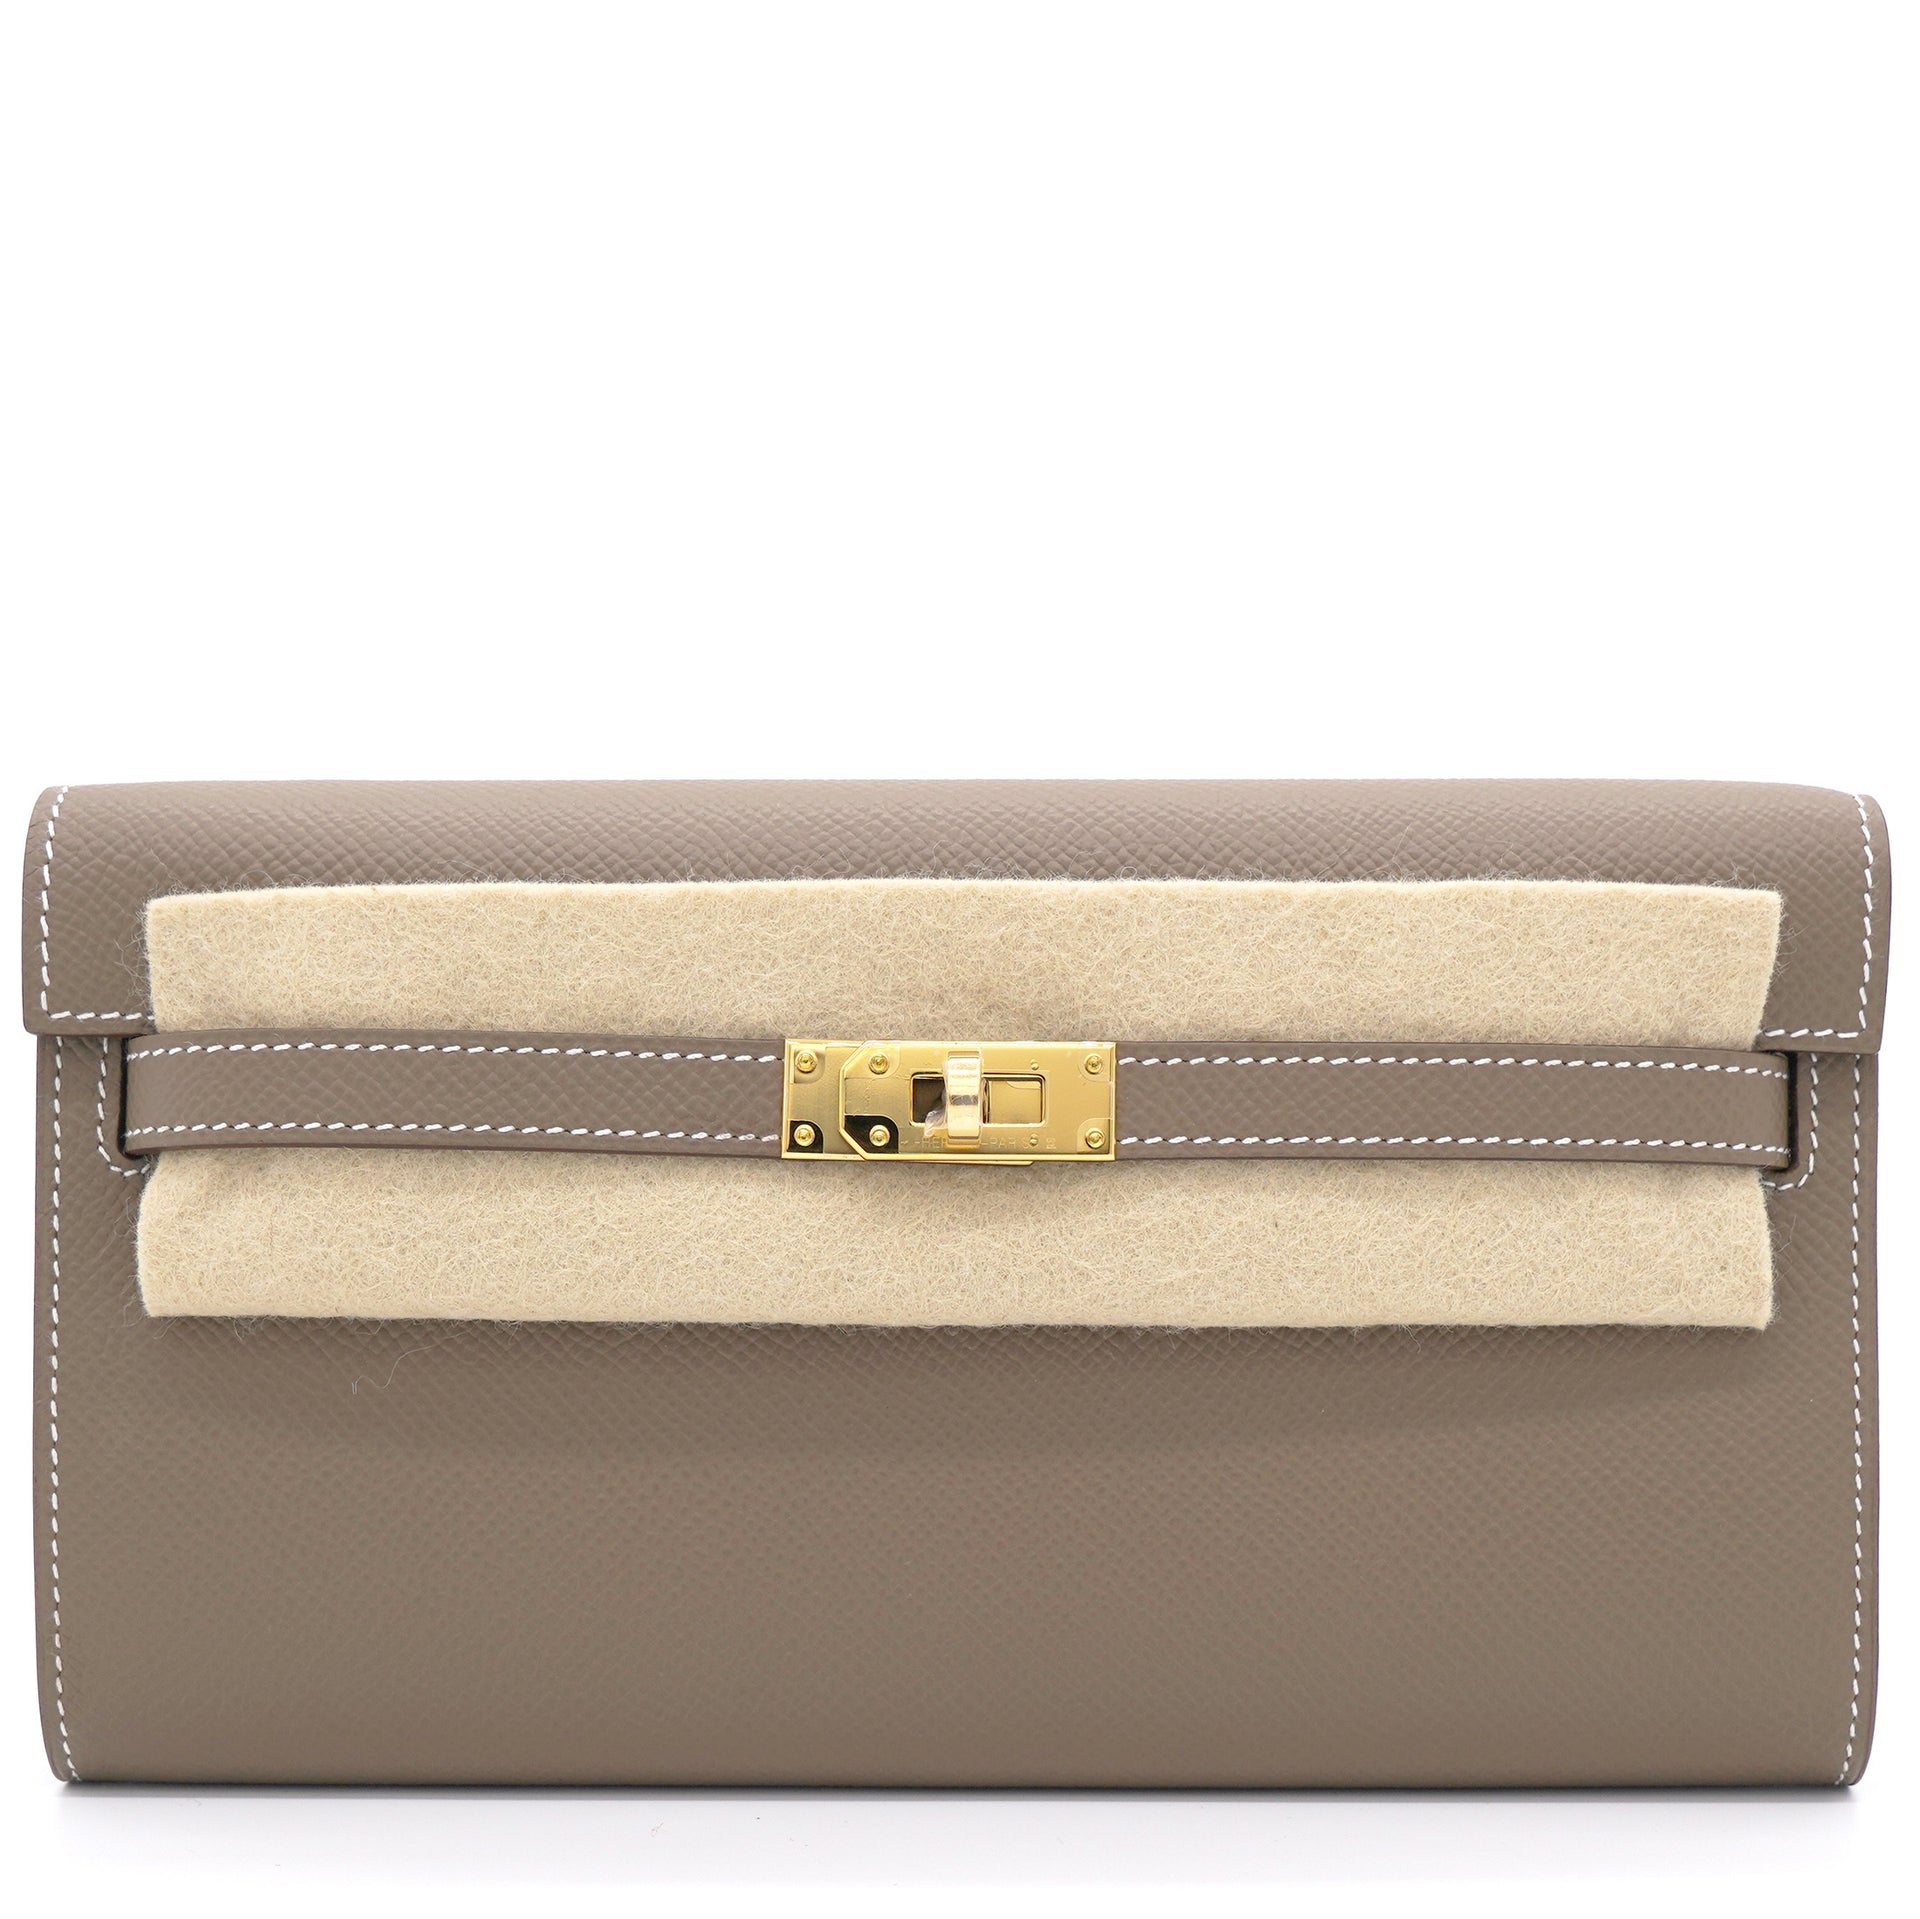 Etoupe Epsom Leather Kelly To Go Wallet Bag